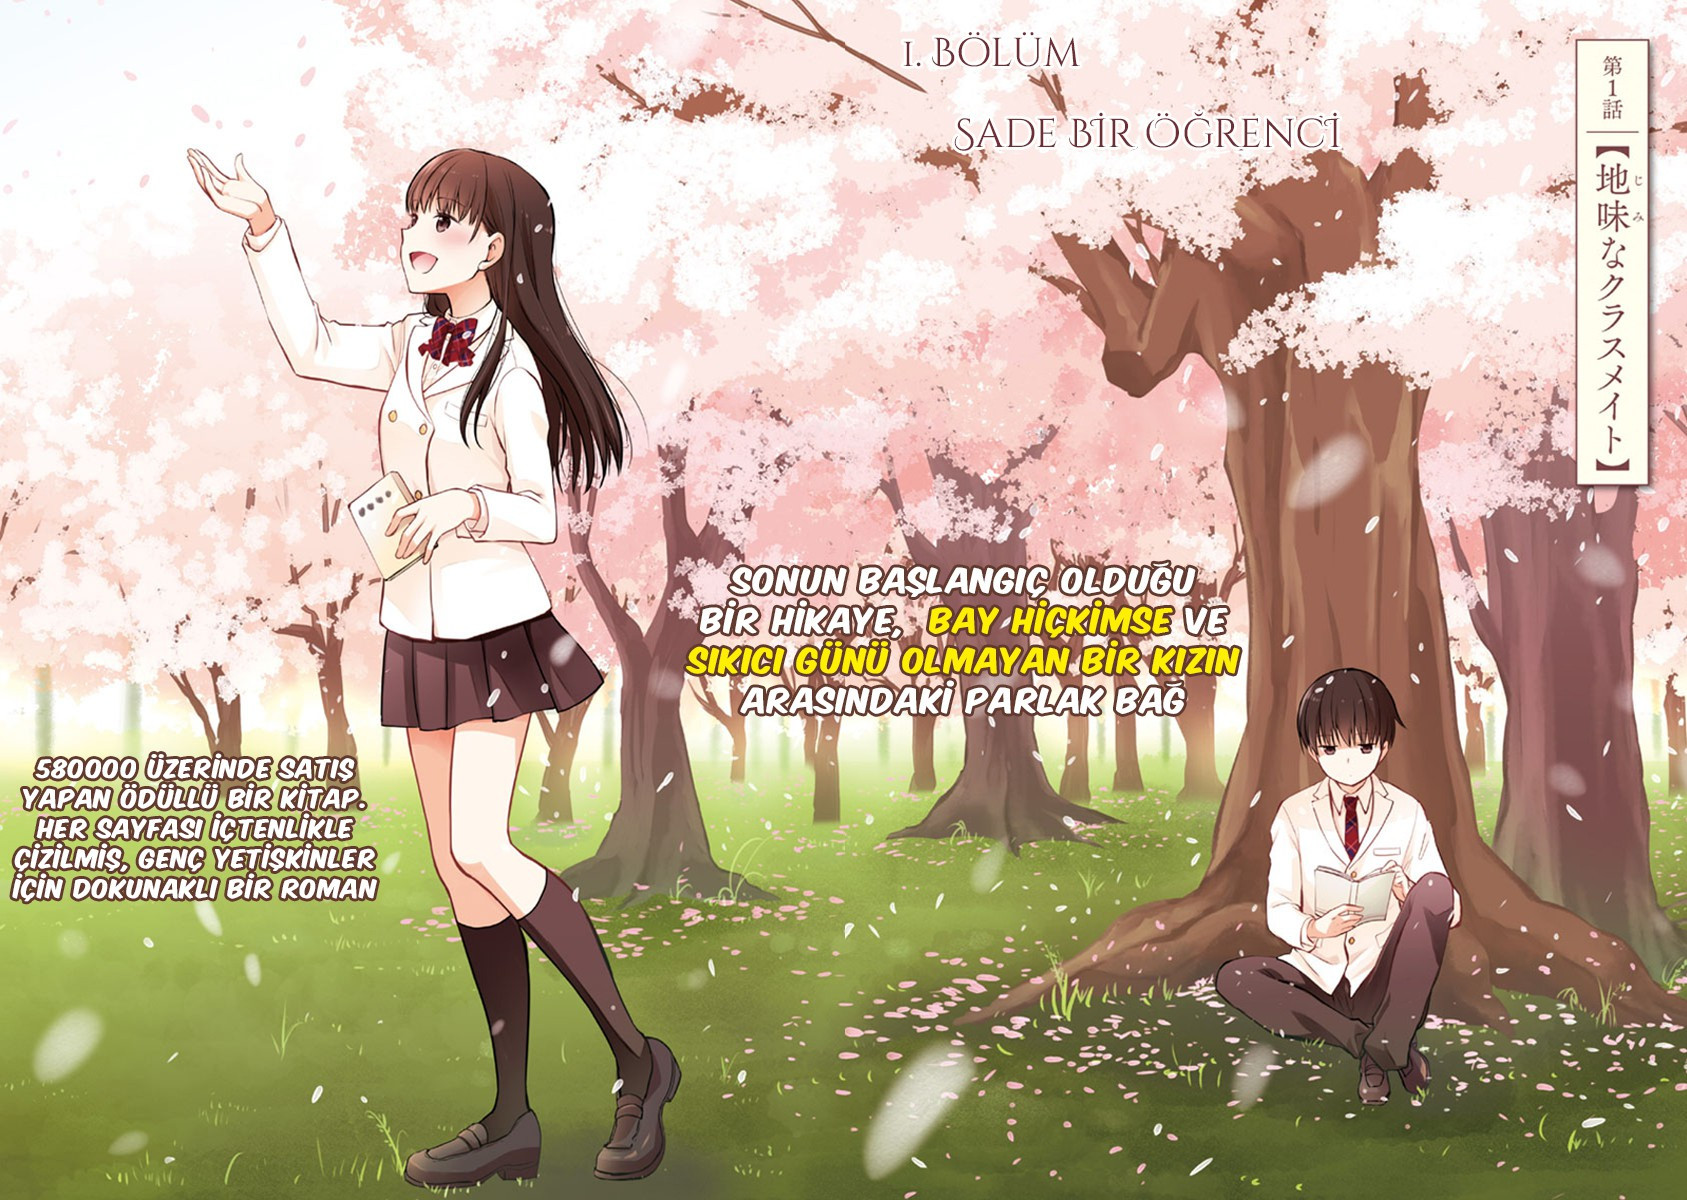 Kimi no Suizou wo Tabetai - Bölüm 1 - Sade Bir Öğrenci - MangaDrop - Anime  izle, Webtoon, Manga ve Novel oku